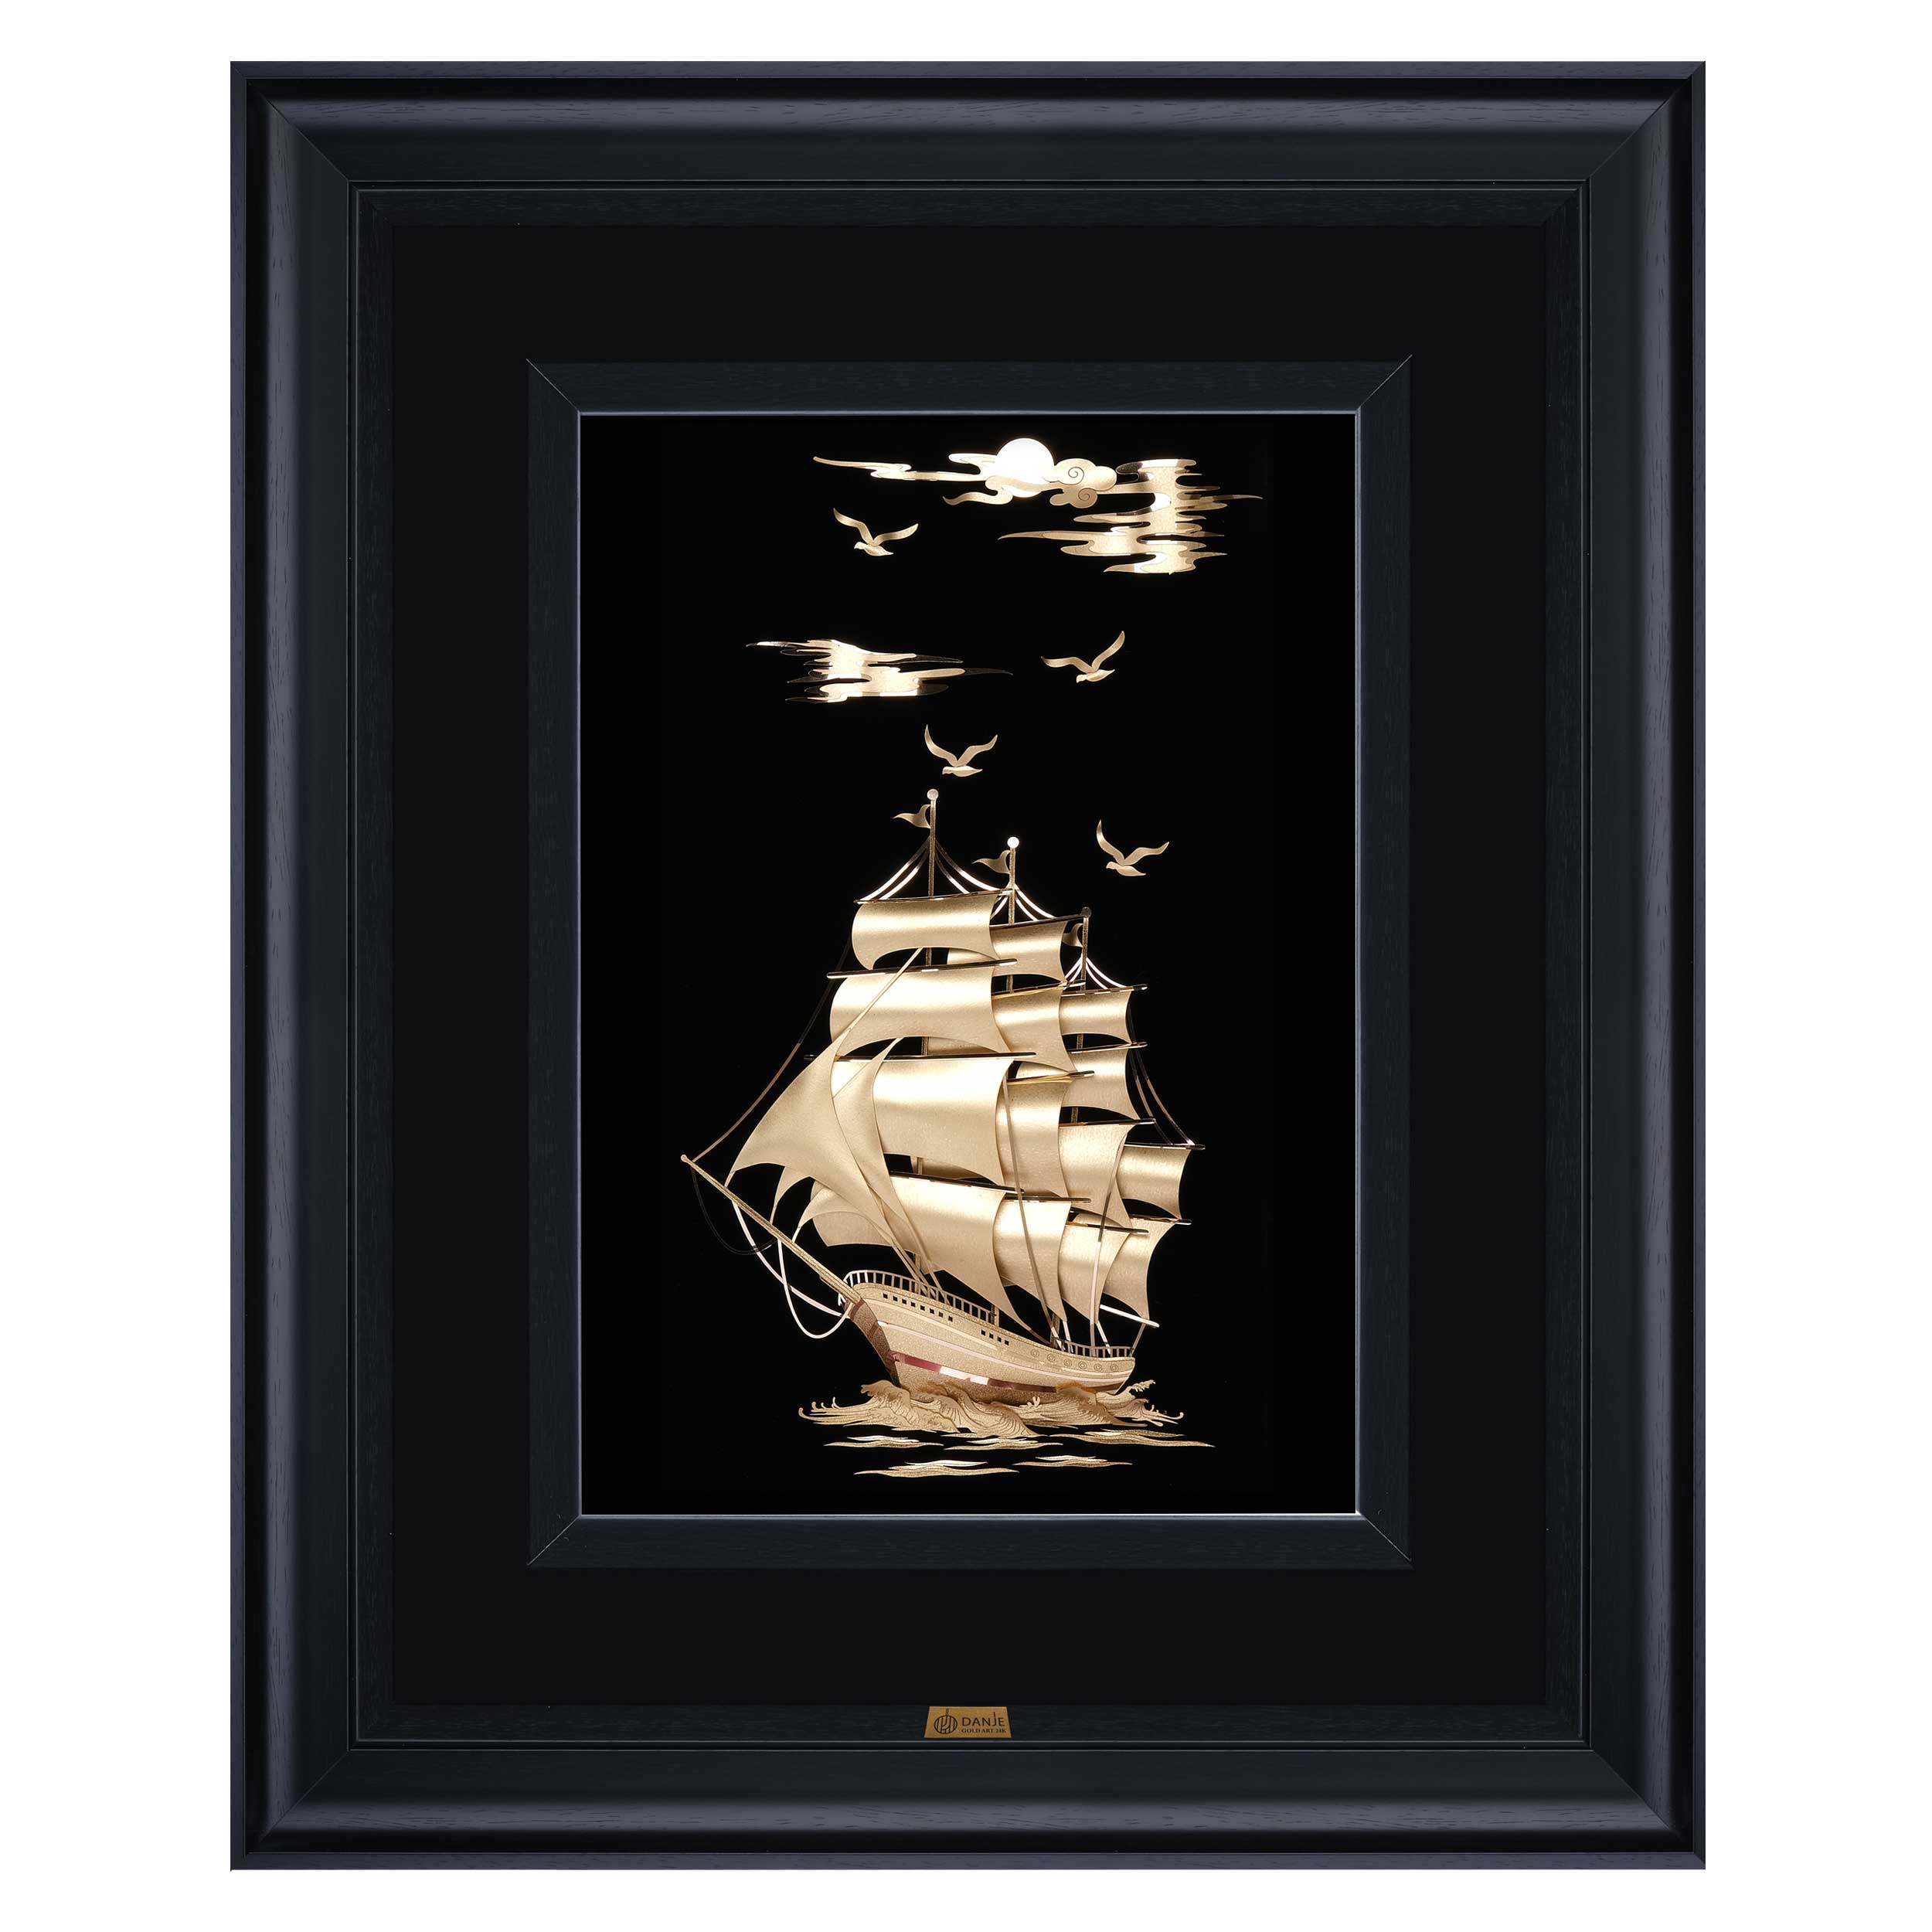 24 carat gold leaf panel with PVC frame of Danjeh brand multi-sail ship design